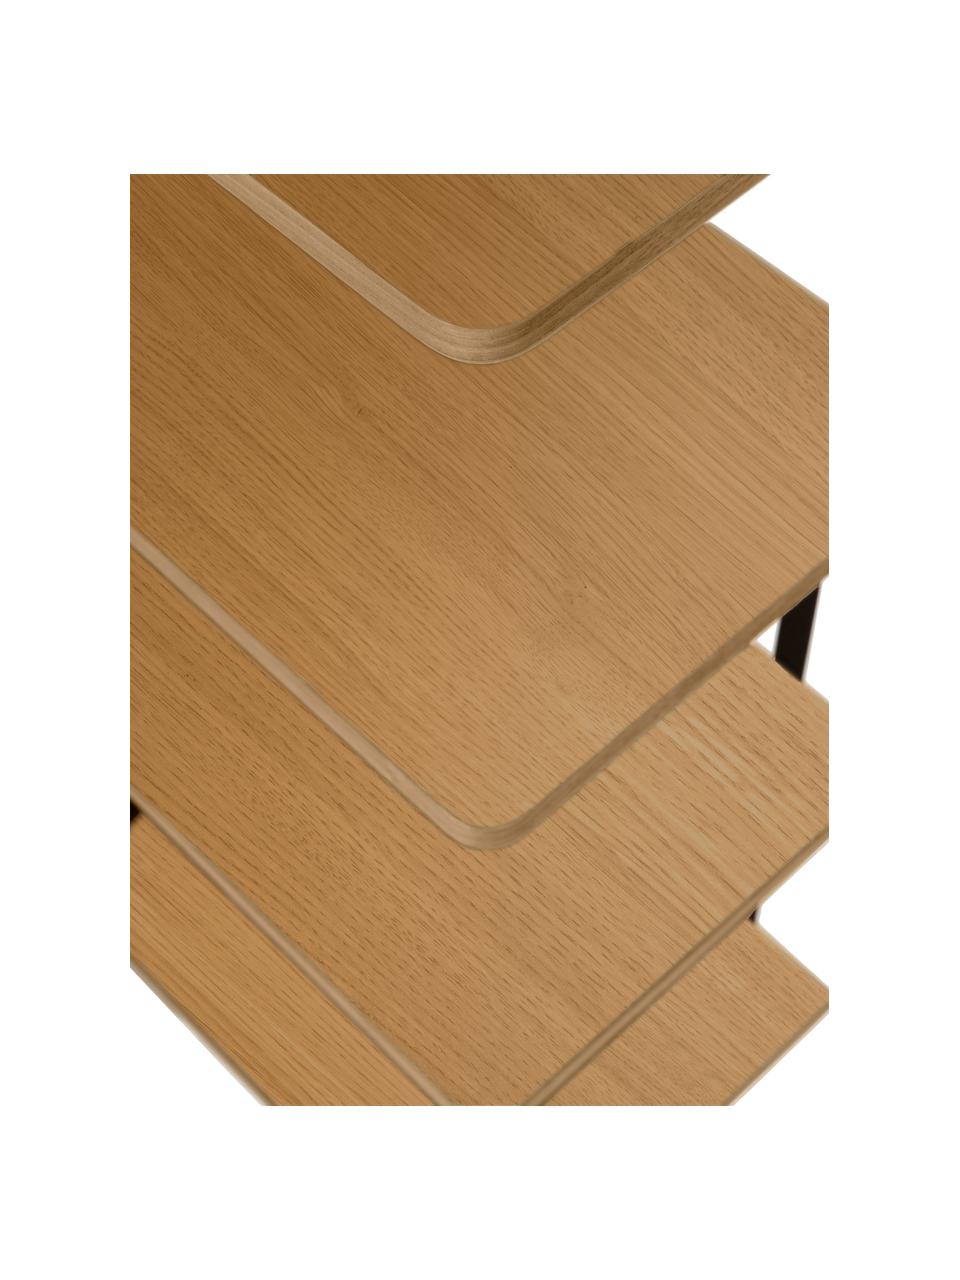 Industrieel wandrek Nadyria van hout en metaal, Frame: gelakt metaal, Plank: MDF met eikenhoutfineer, Zwart, donkerbruin, 100 x 180 cm